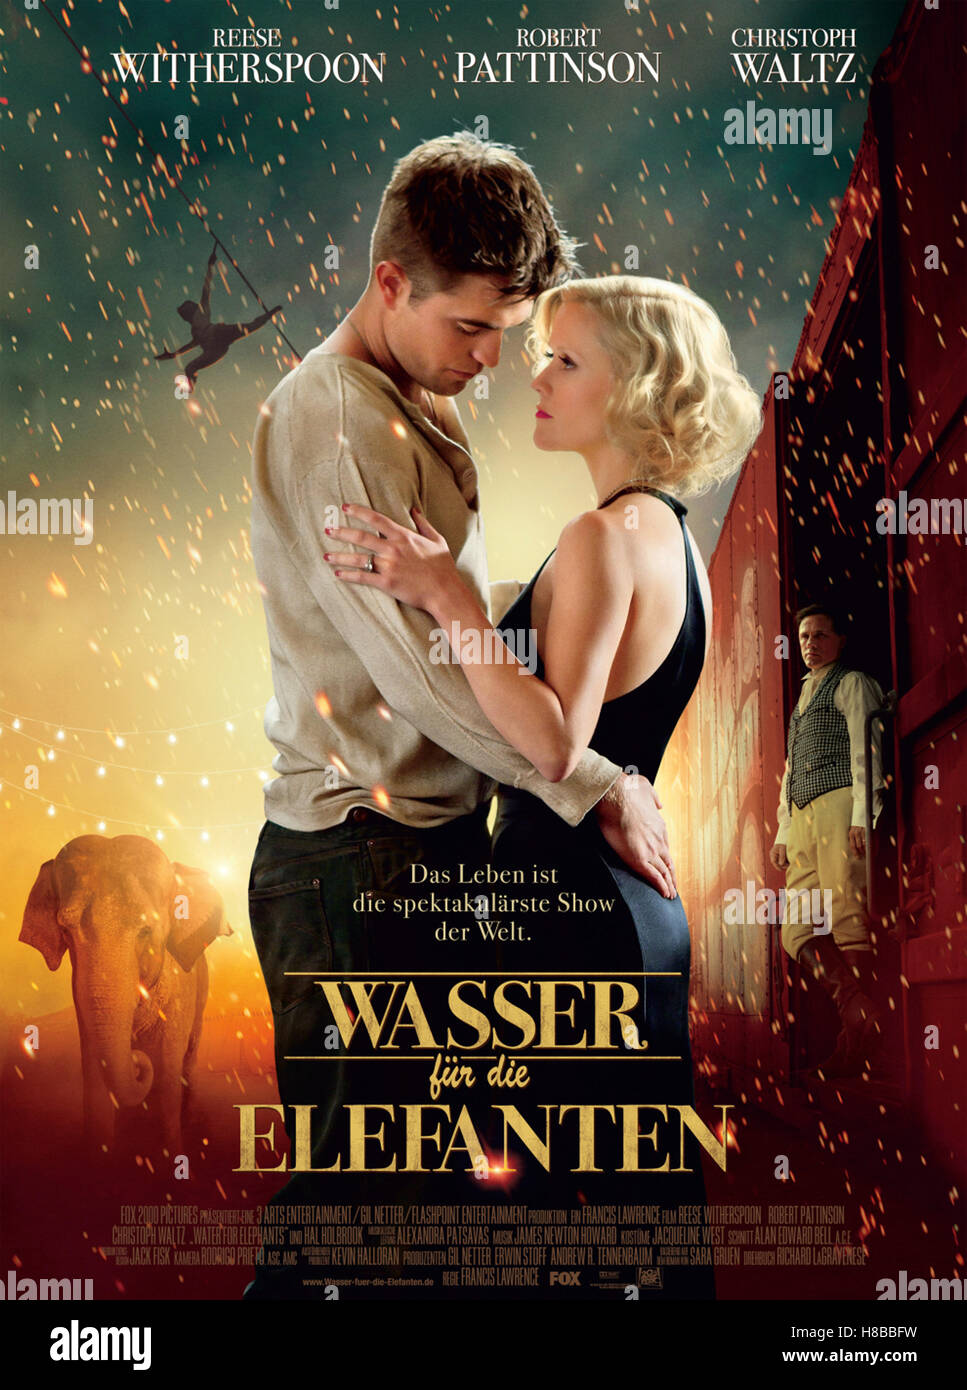 Wasser für die Elefanten, (acqua per gli elefanti) USA 2011, Regie: Francis Lawrence, Robert Pattinson, Reese Witherspoon, Chiave: Plakat Foto Stock